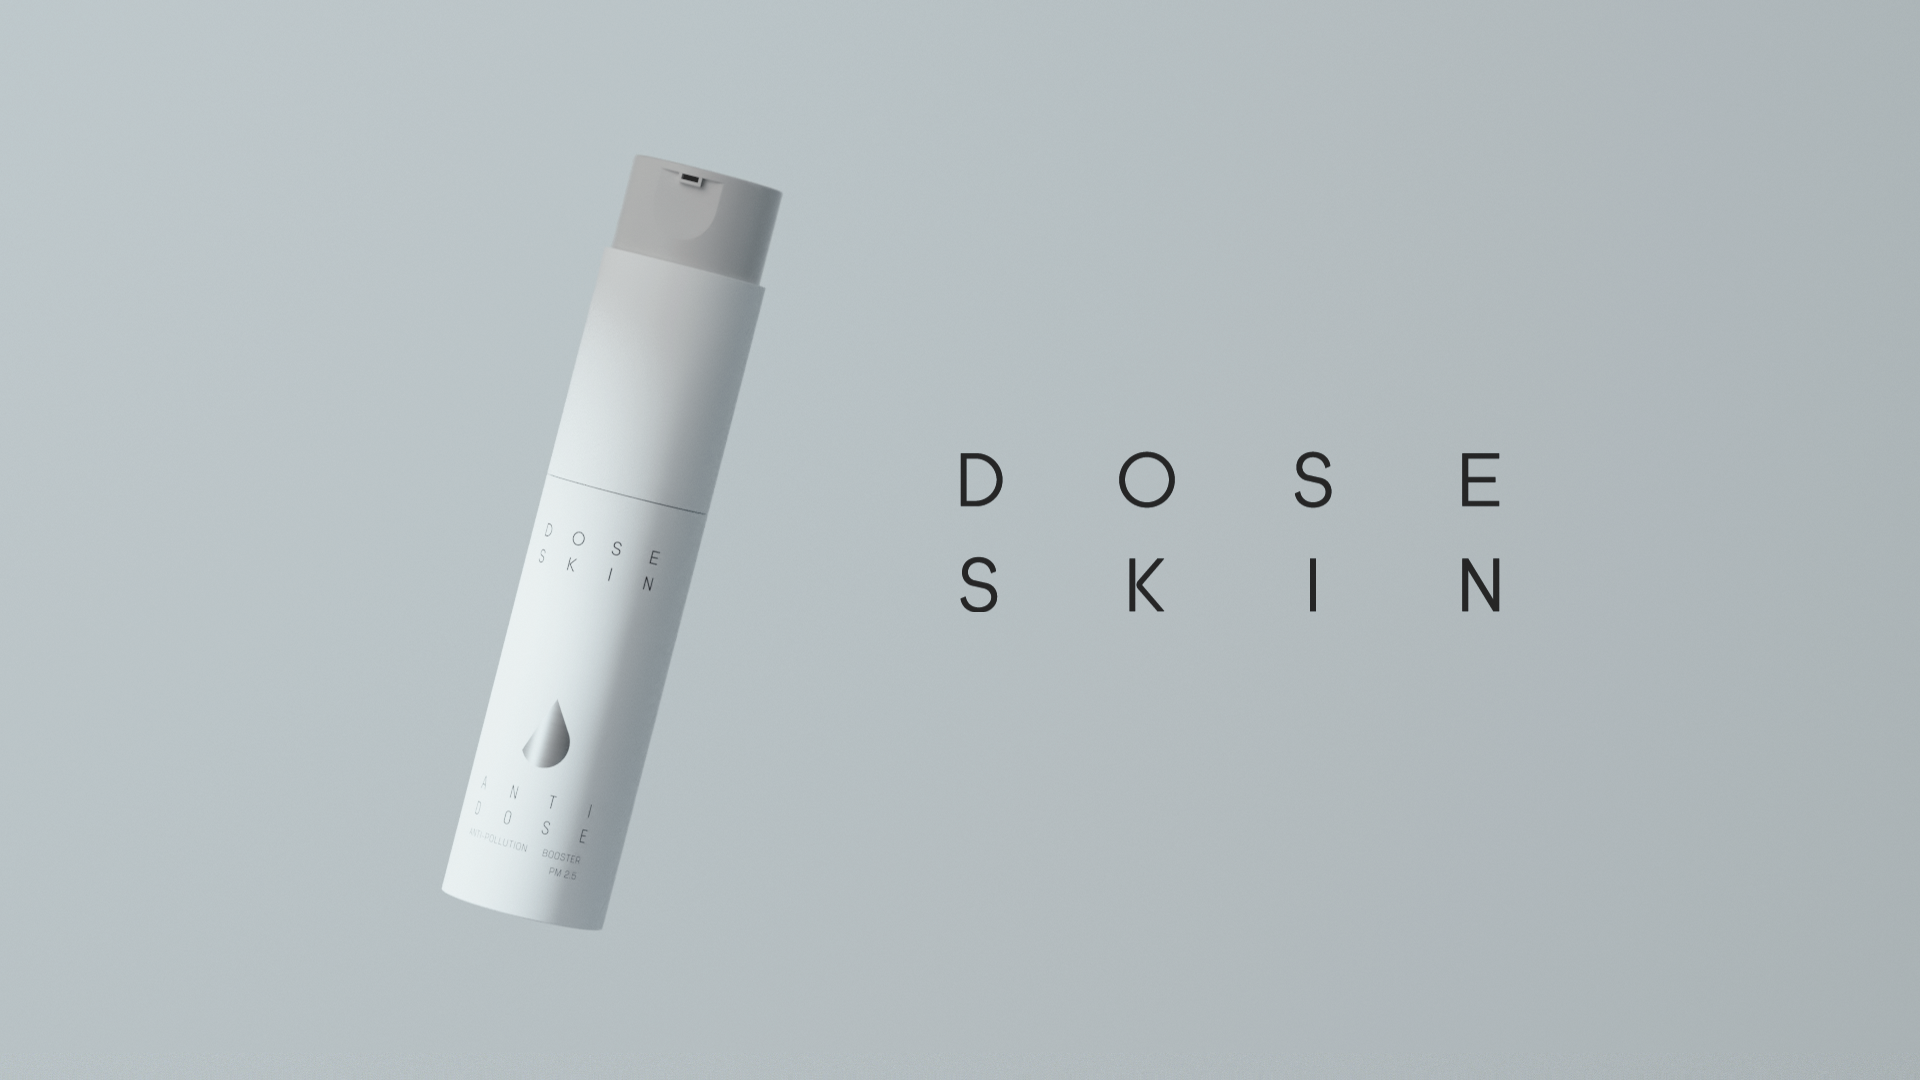 Dose Skin TATO 3D Packaging Render Cinema4D